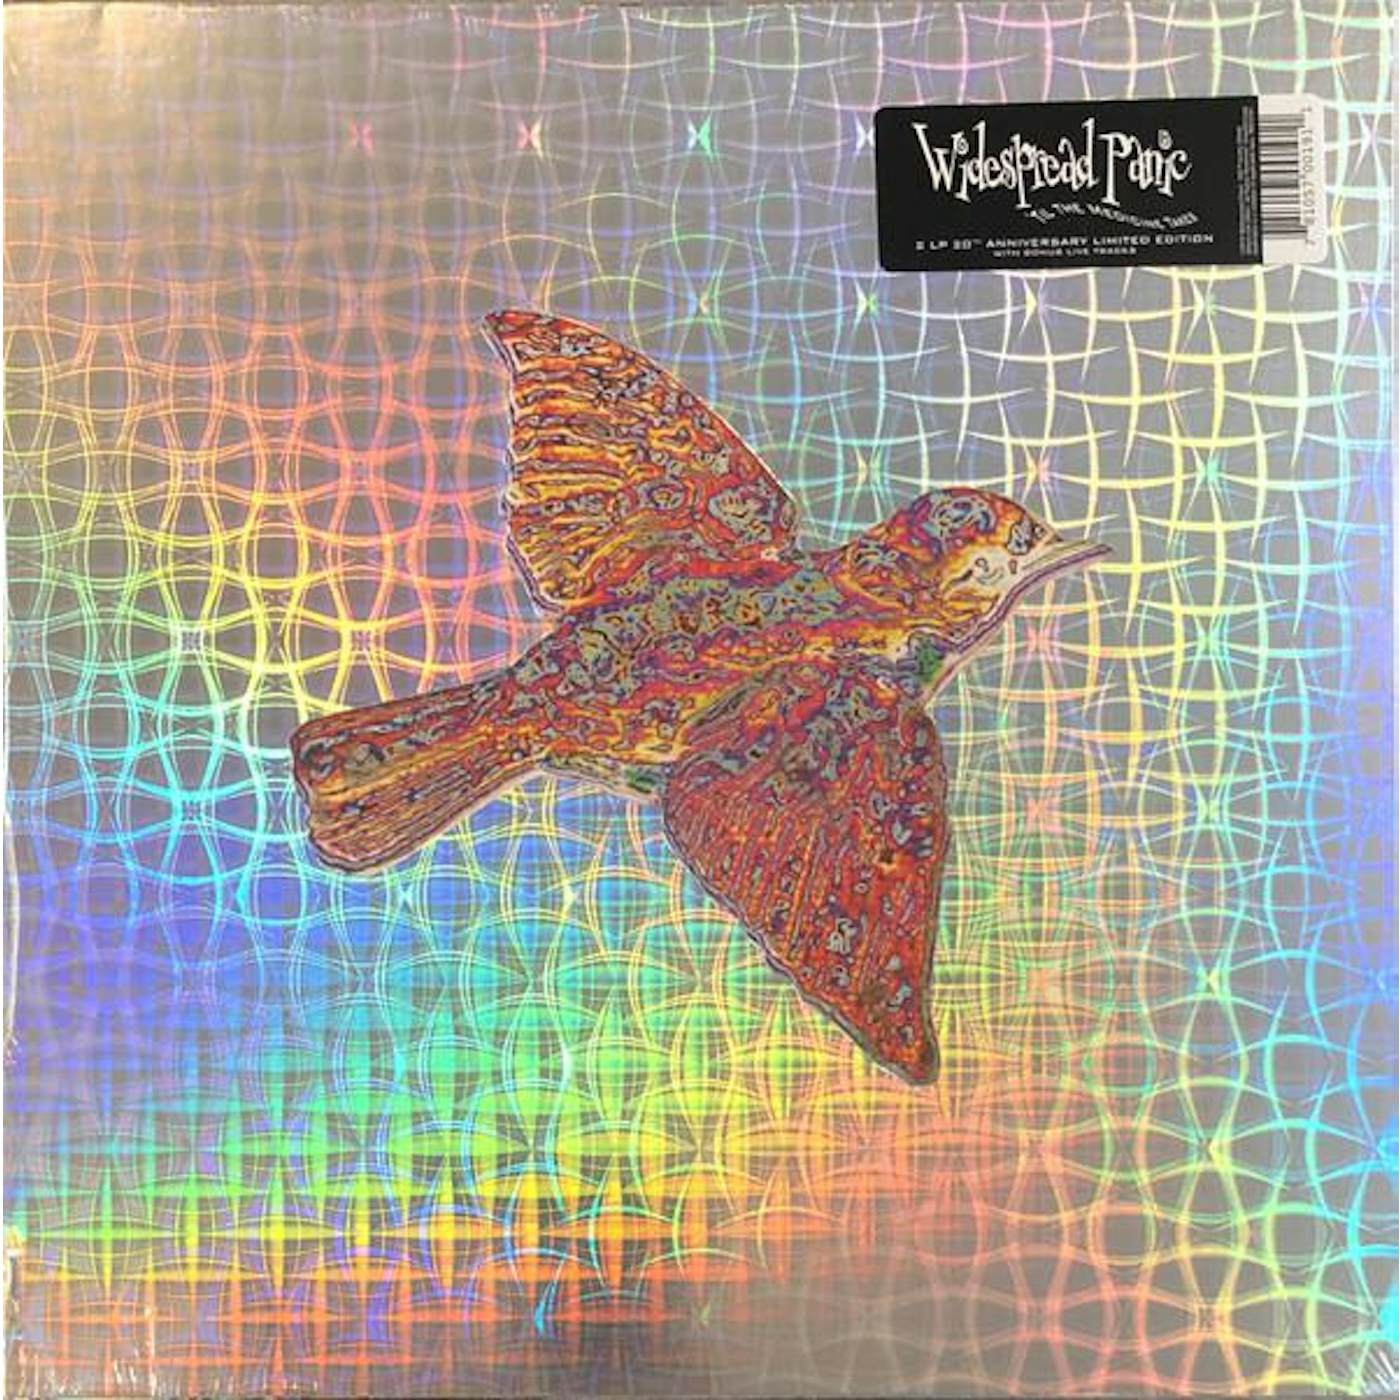 Widespread Panic TIL THE MEDICINE TAKES (2LP/140G/3D lenticular cover) Vinyl Record